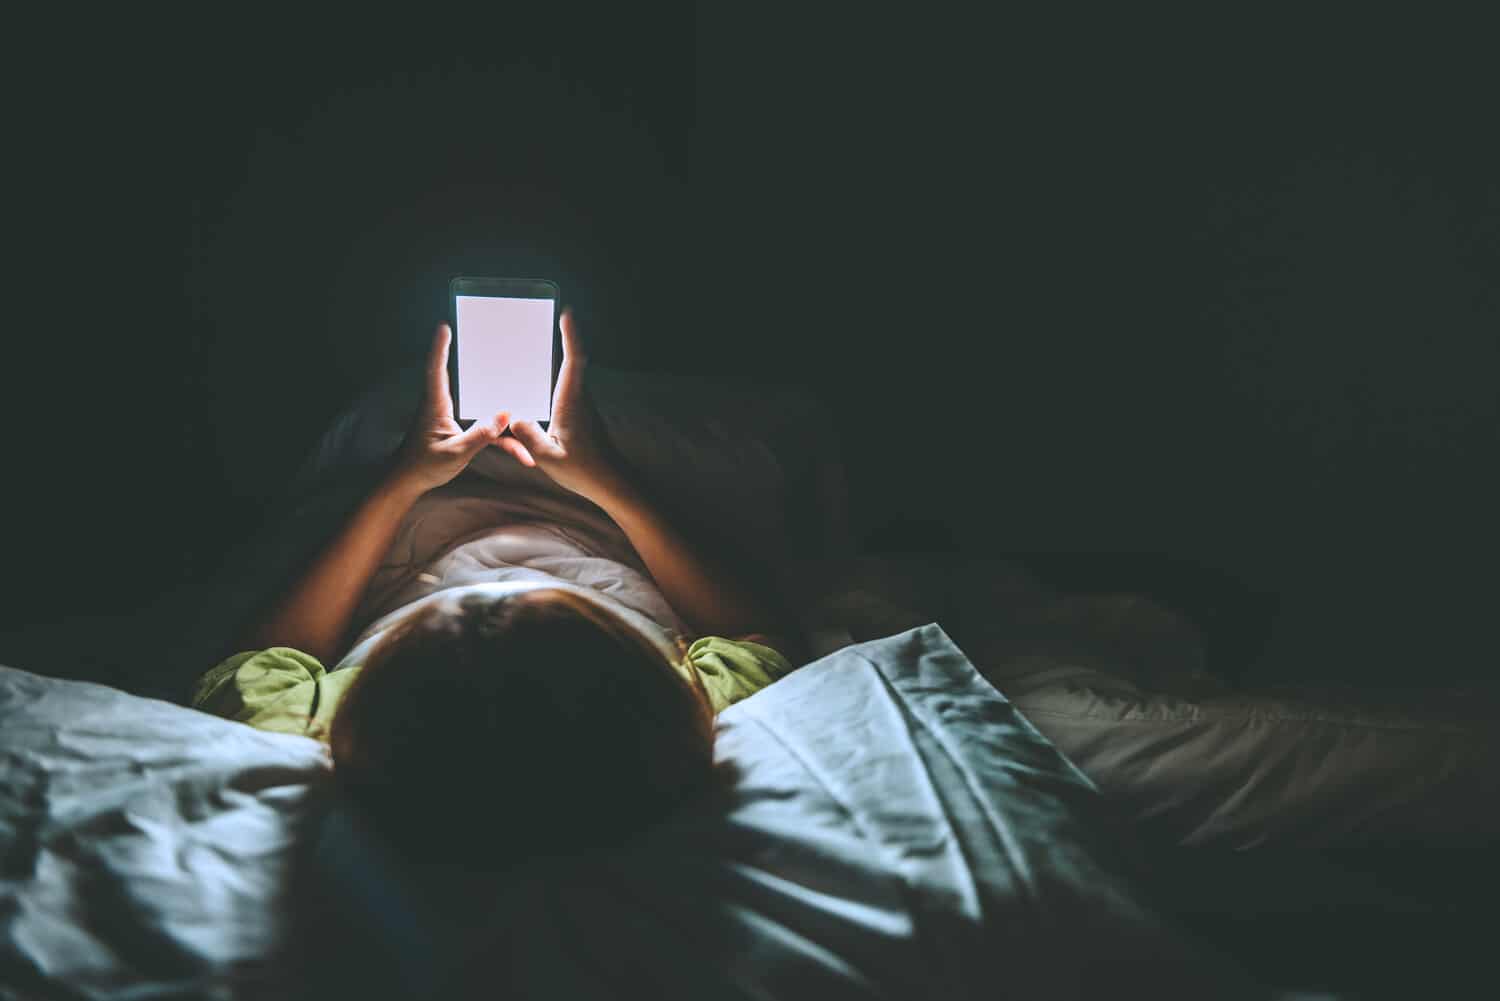 How Does Screen Time Impact Sleep?